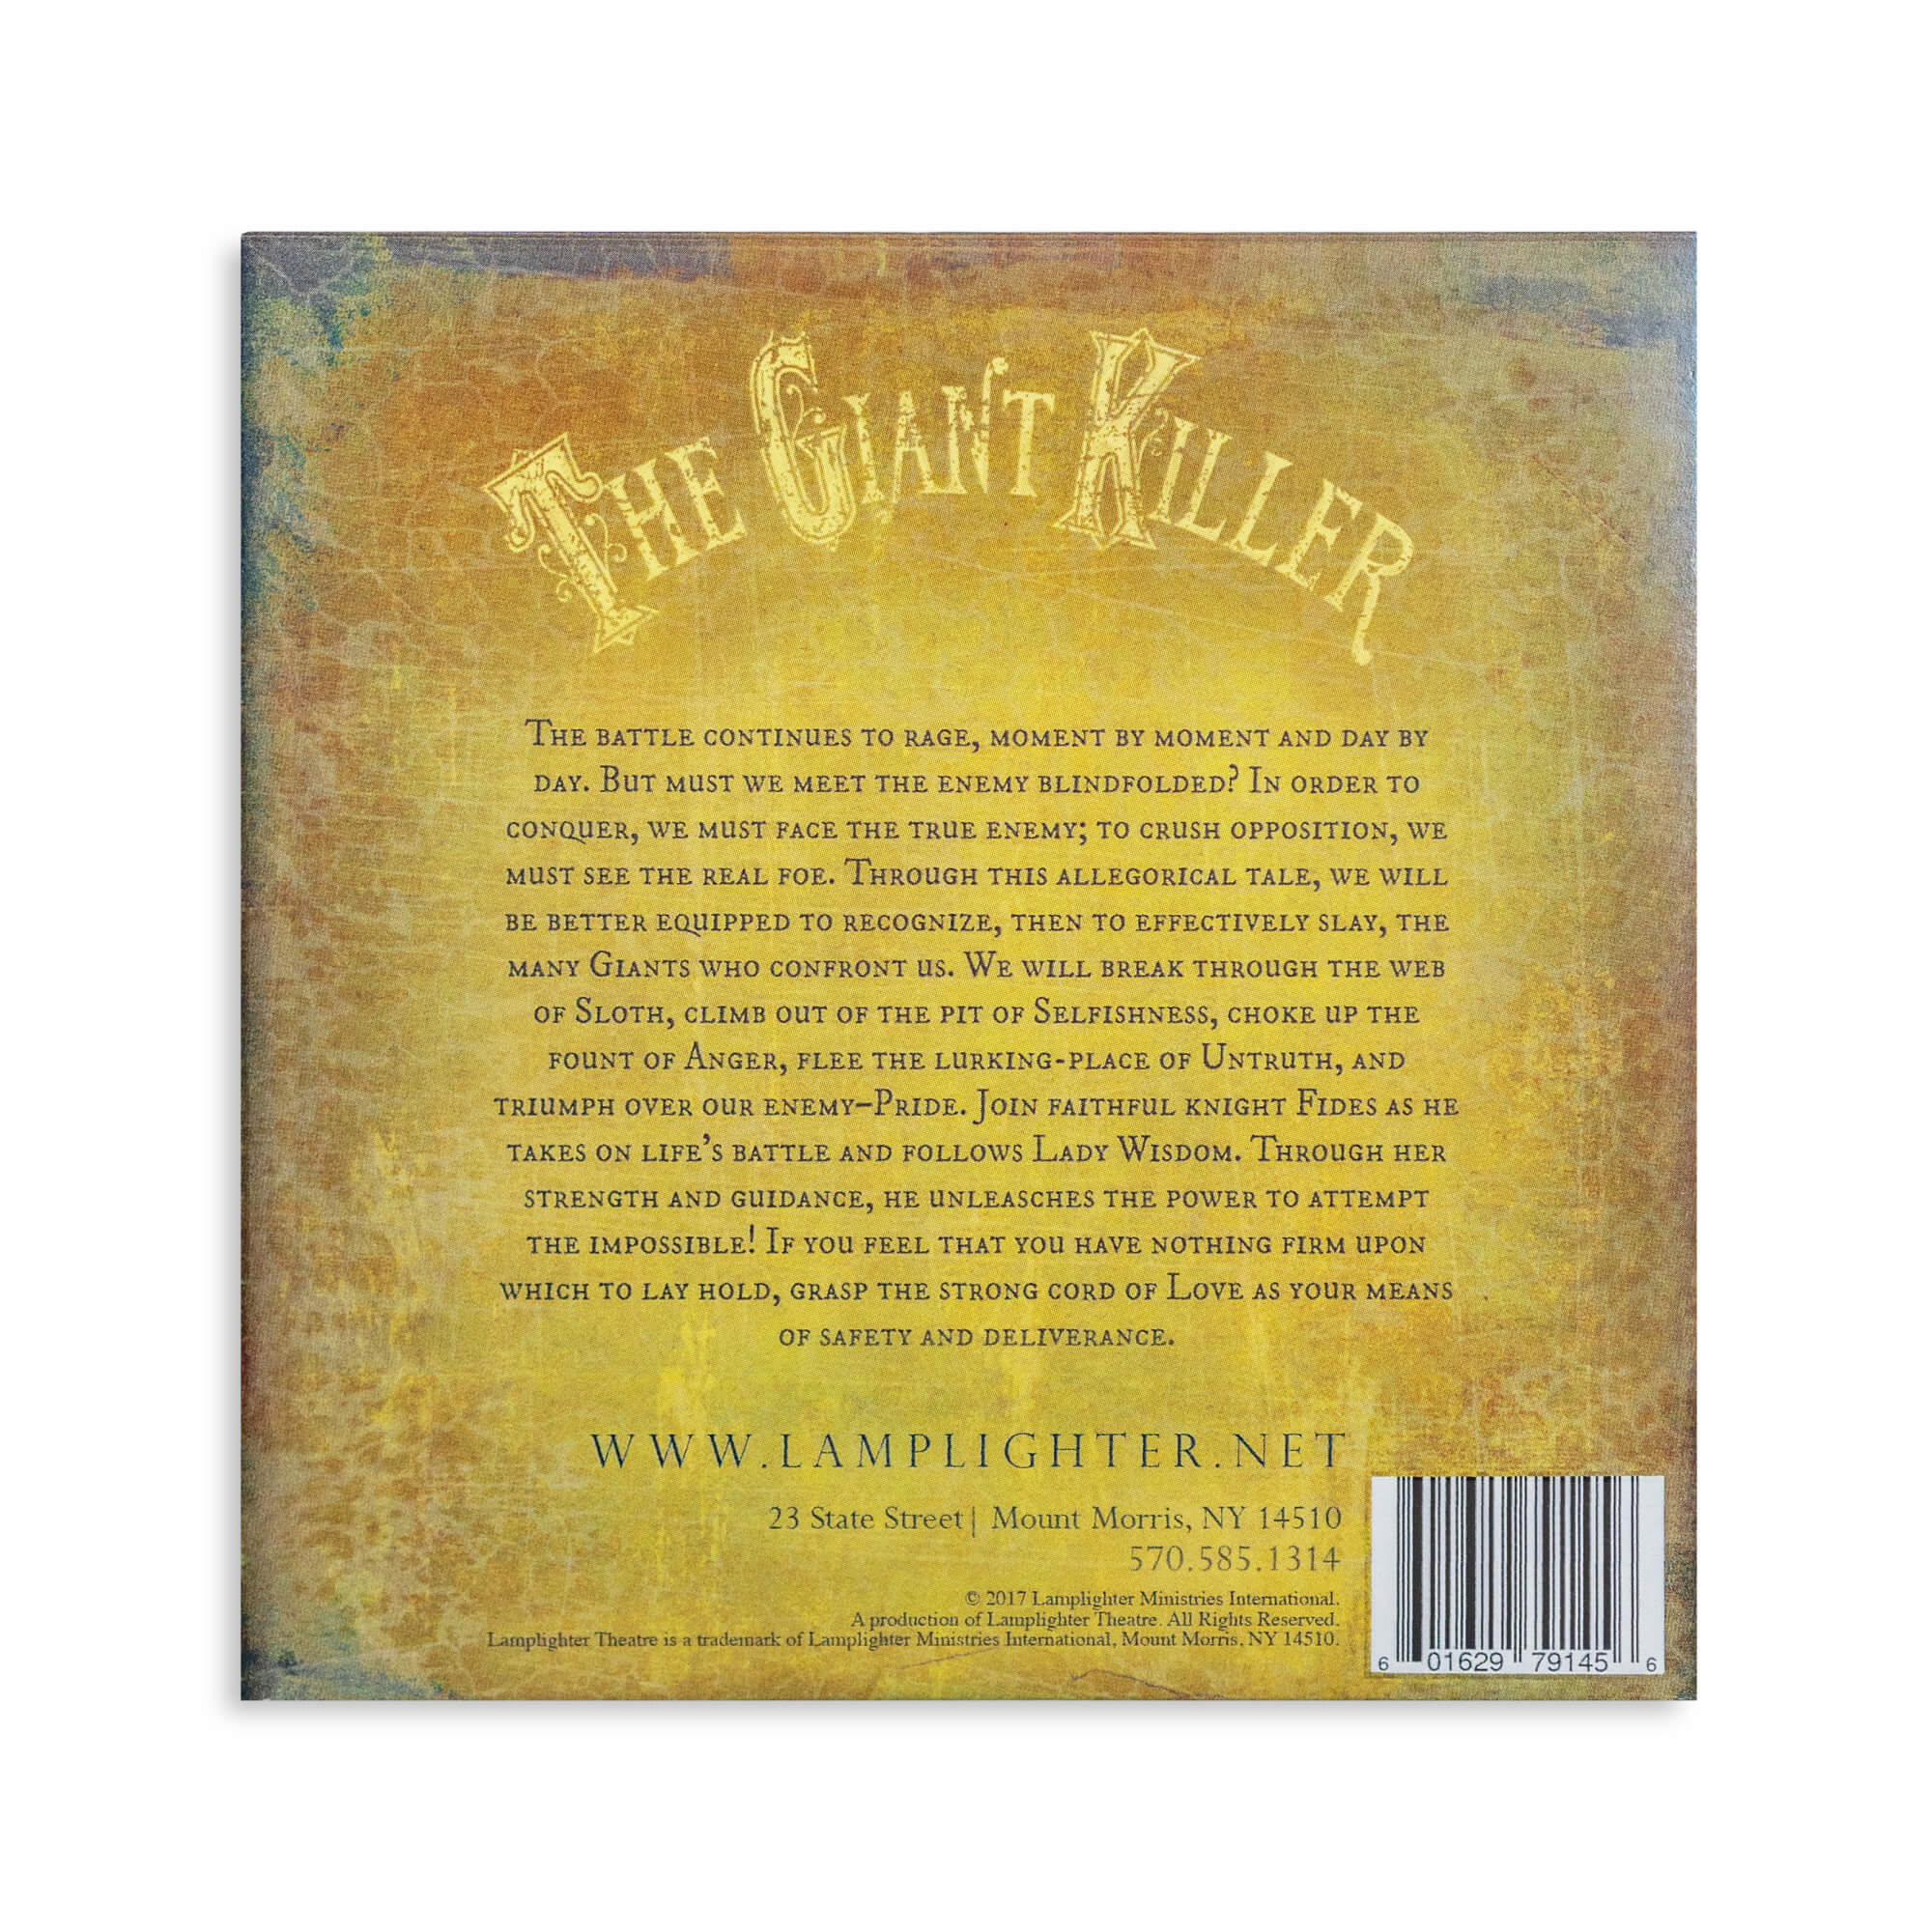 The Giant Killer Audio Drama CD